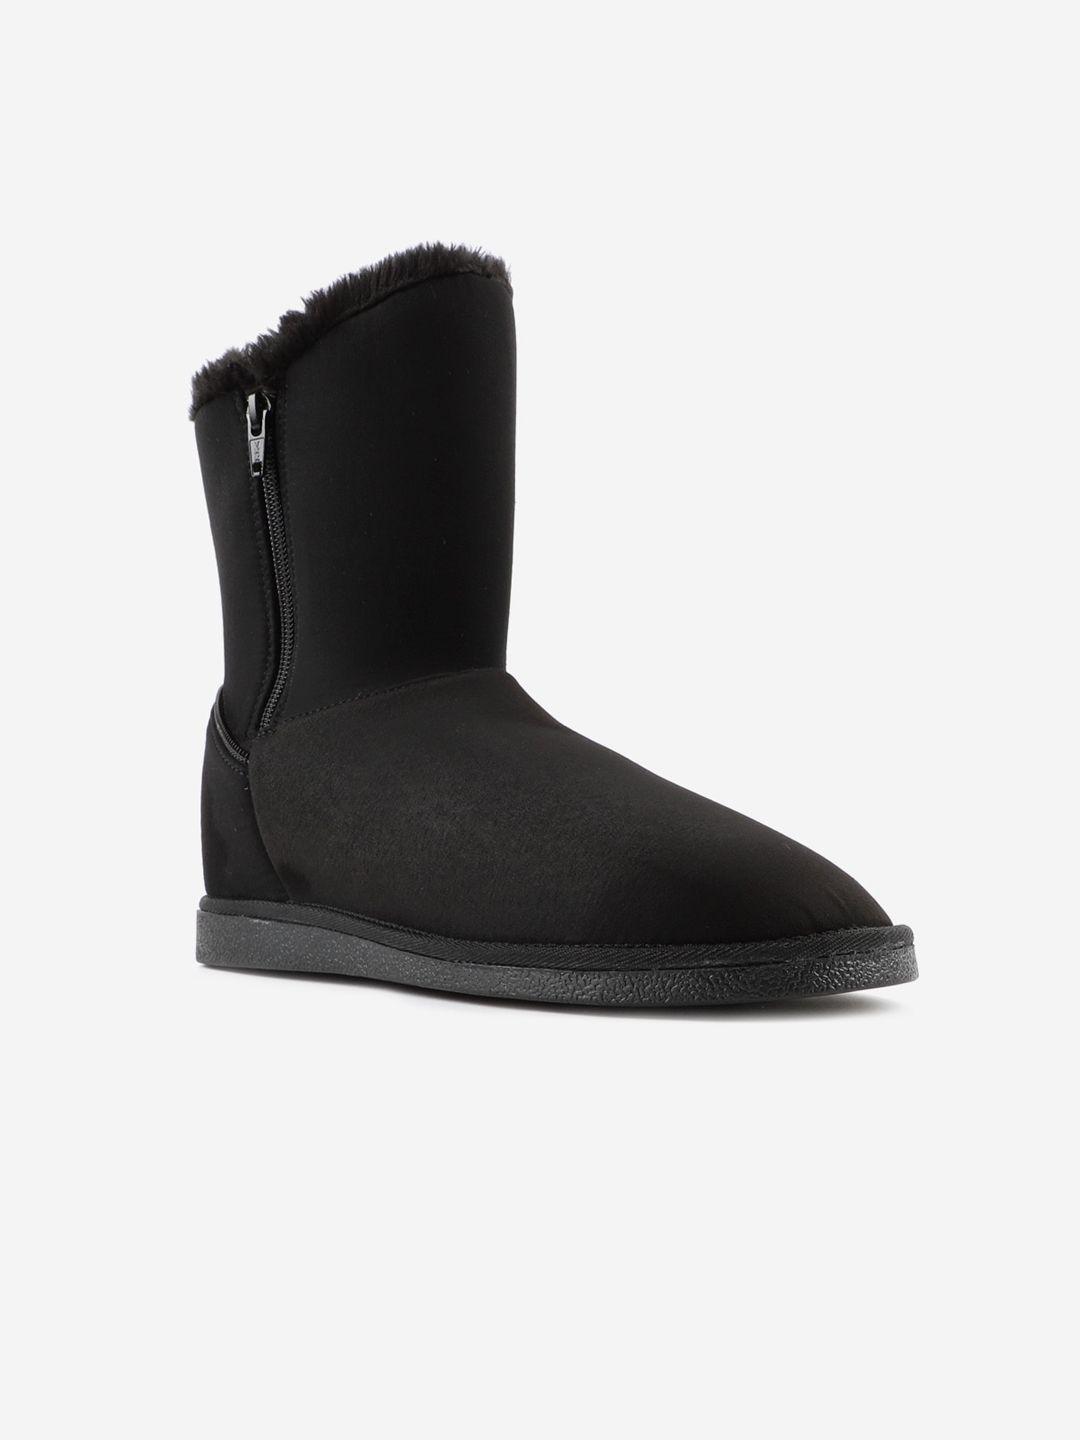 carlton-london-women-black-flat-boots